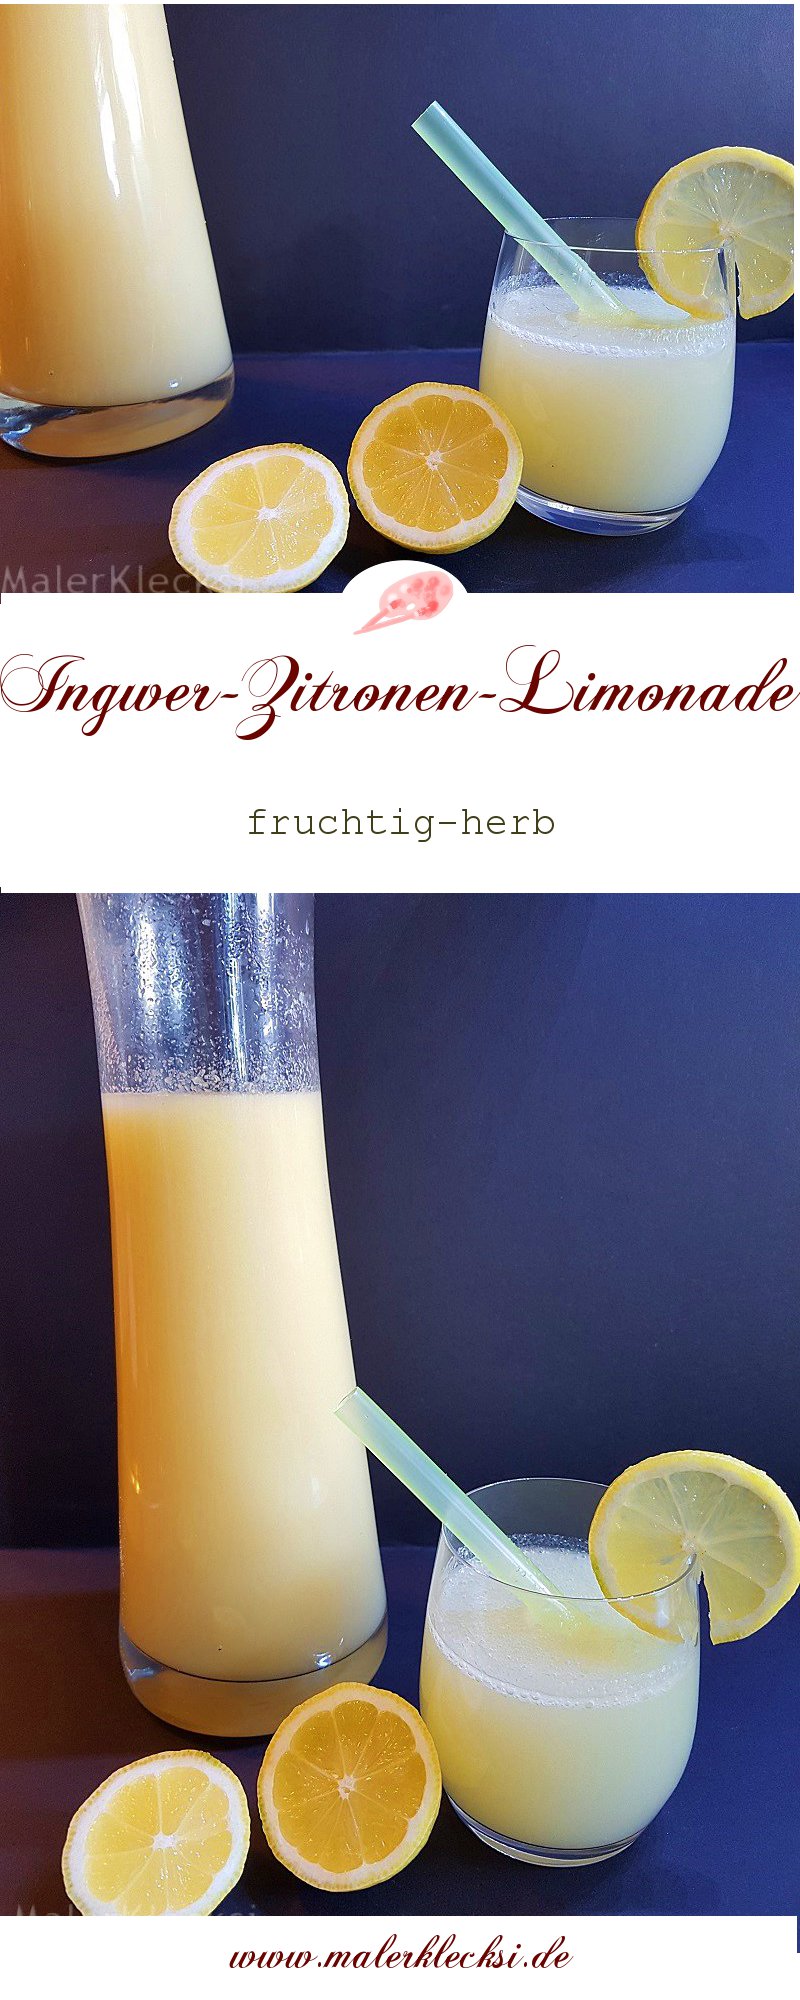 Ingwer-Zitronen-Limonade